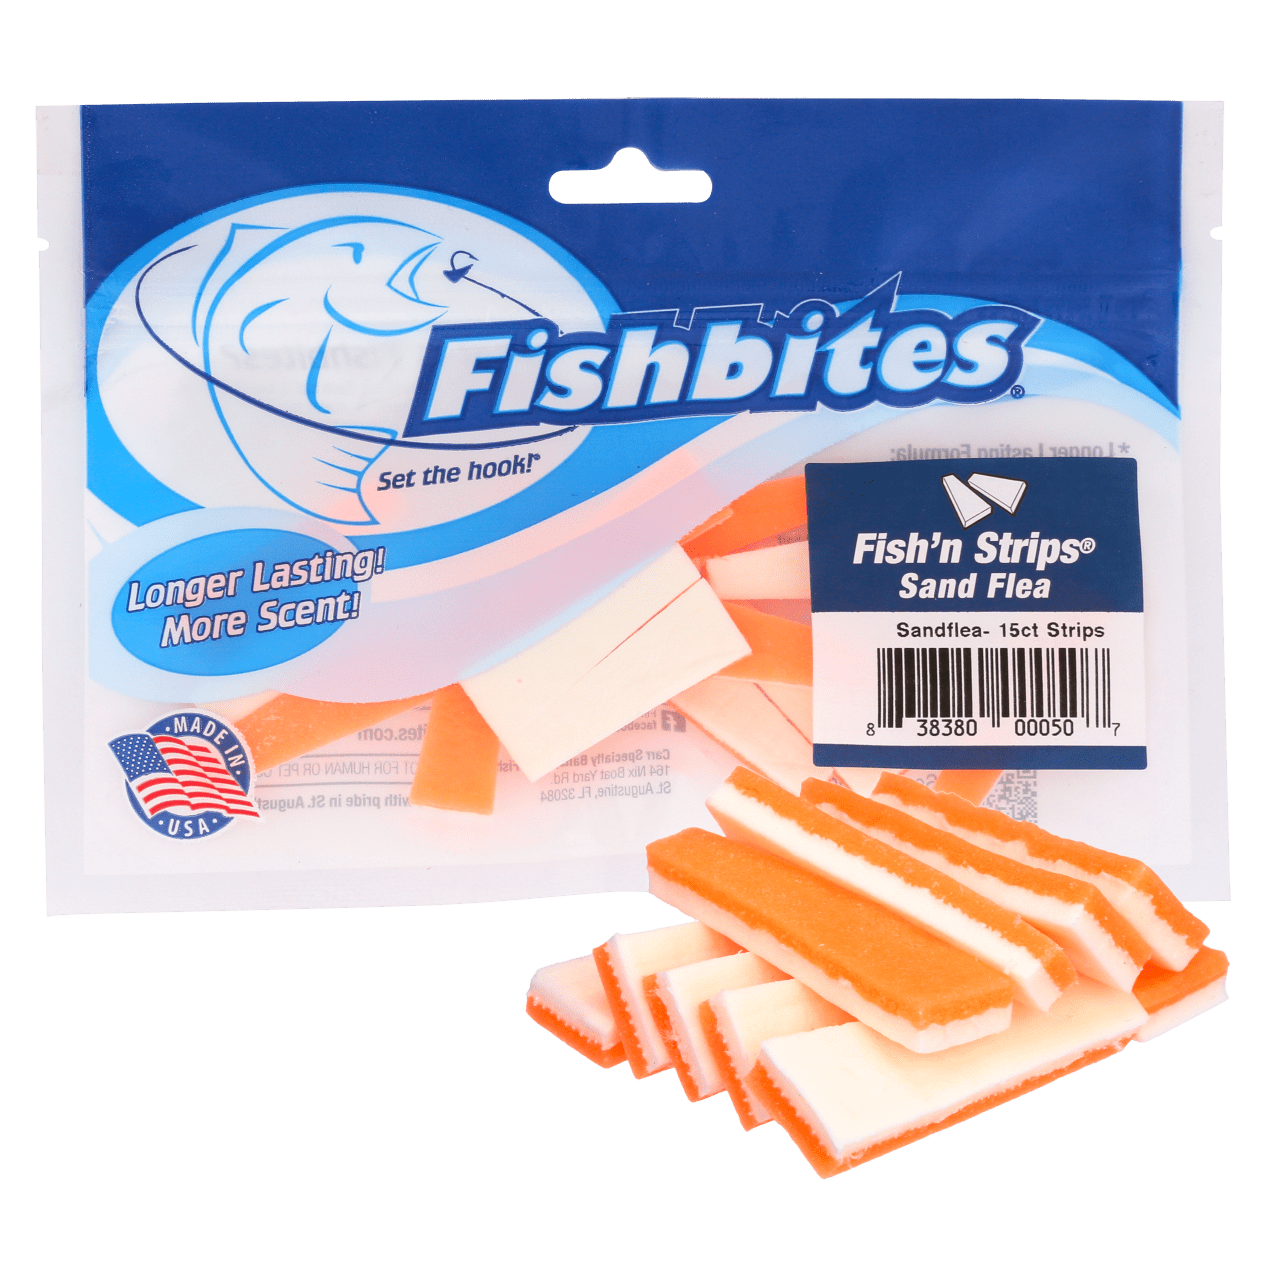 Fishbites Fish'n Strips® Sand Flea - Fishbites